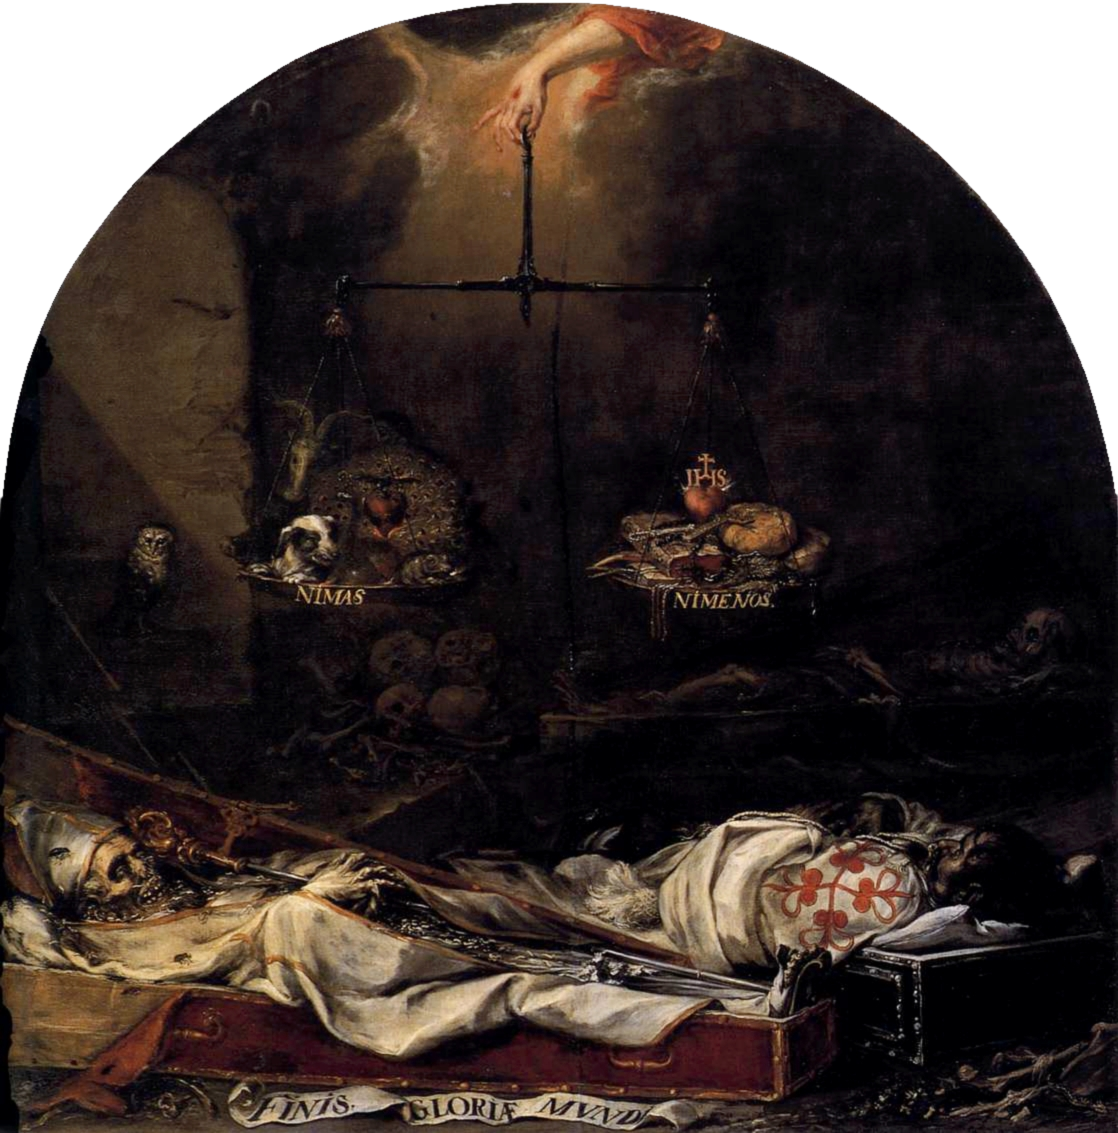 Finis gloriae mundi Źródło: Juan Valdés Leal, Finis gloriae mundi, 1672, olej na płótnie, Iglesia y Hospital de la Caridad, Sewilla, domena publiczna.